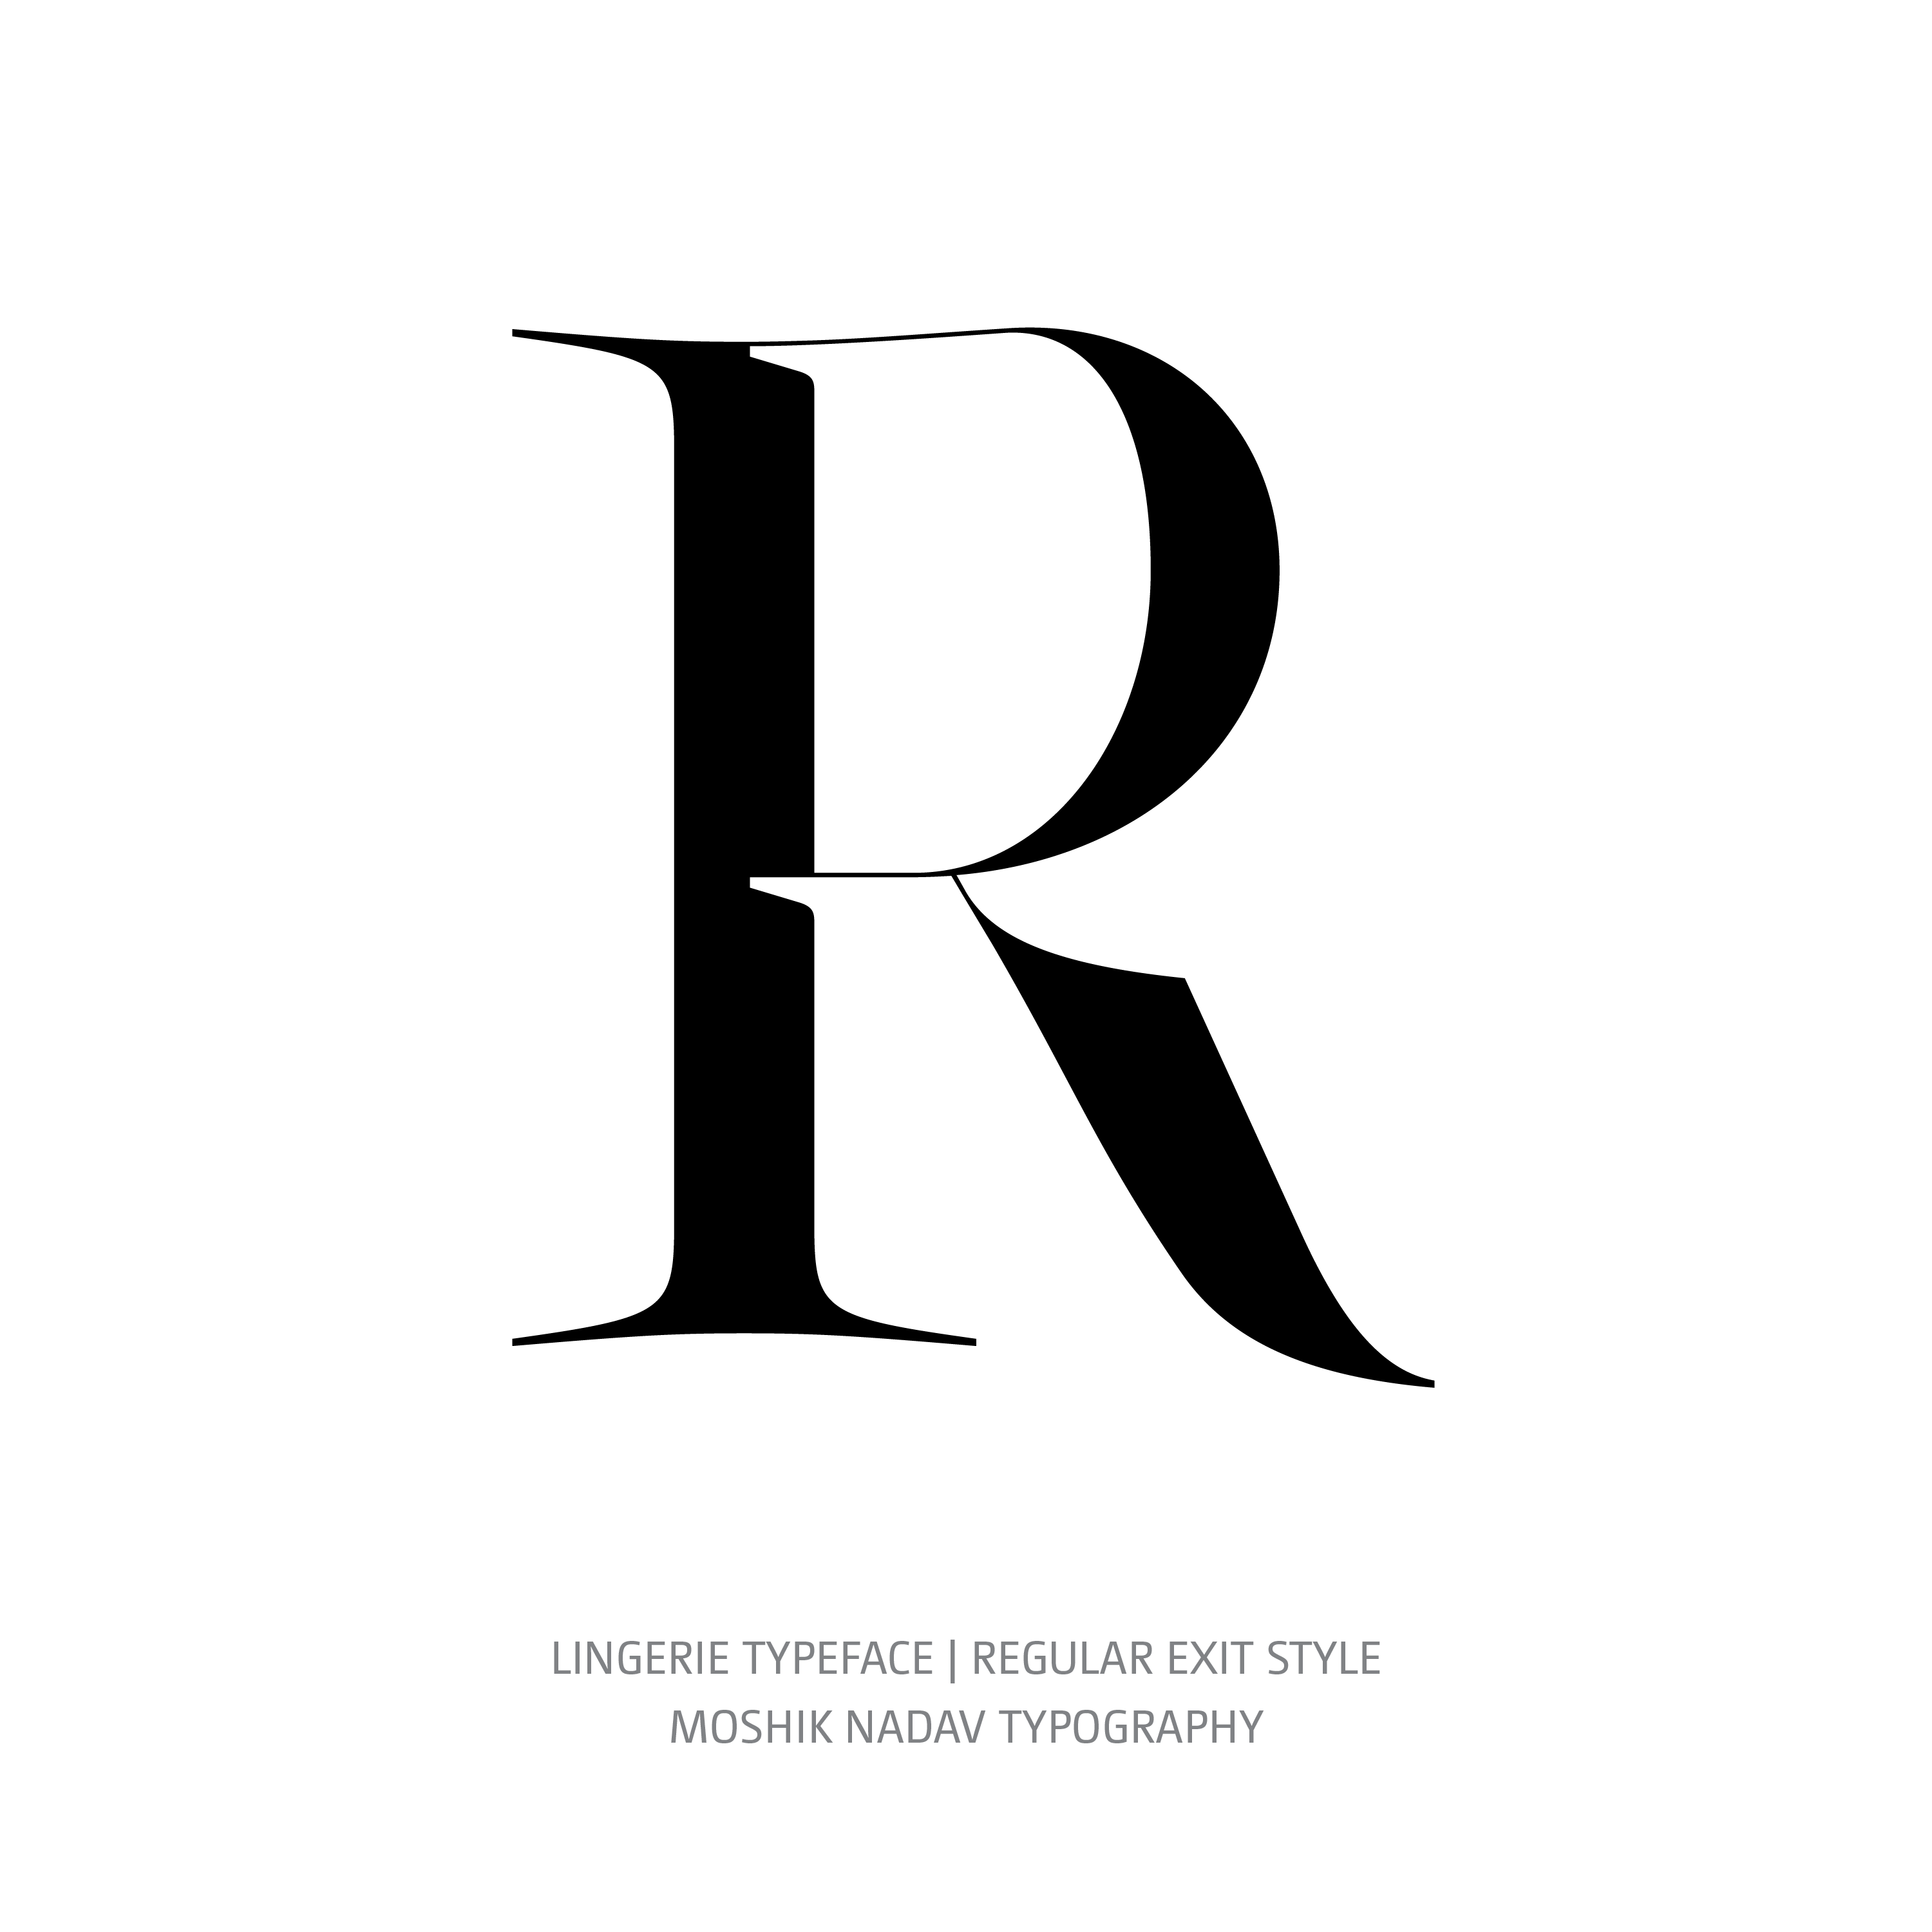 Lingerie Typeface Regular Exit R